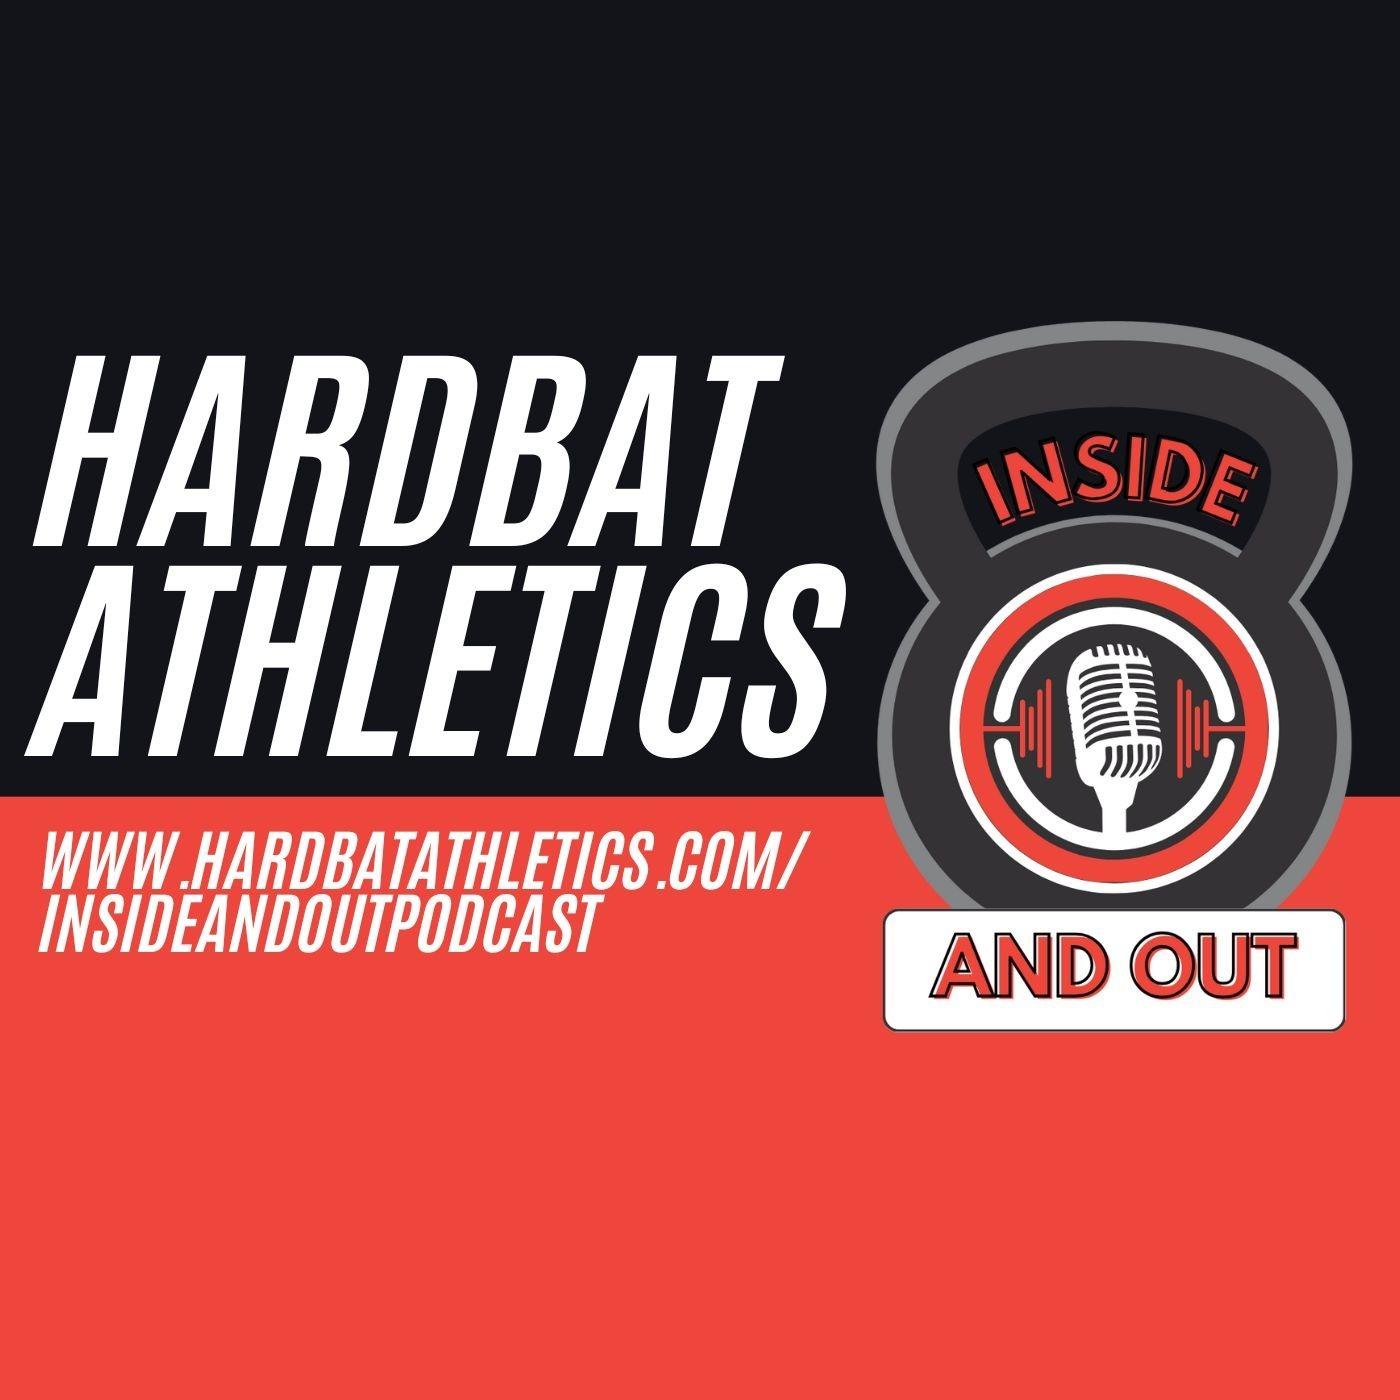 Hardbat Athletics: Inside and Out